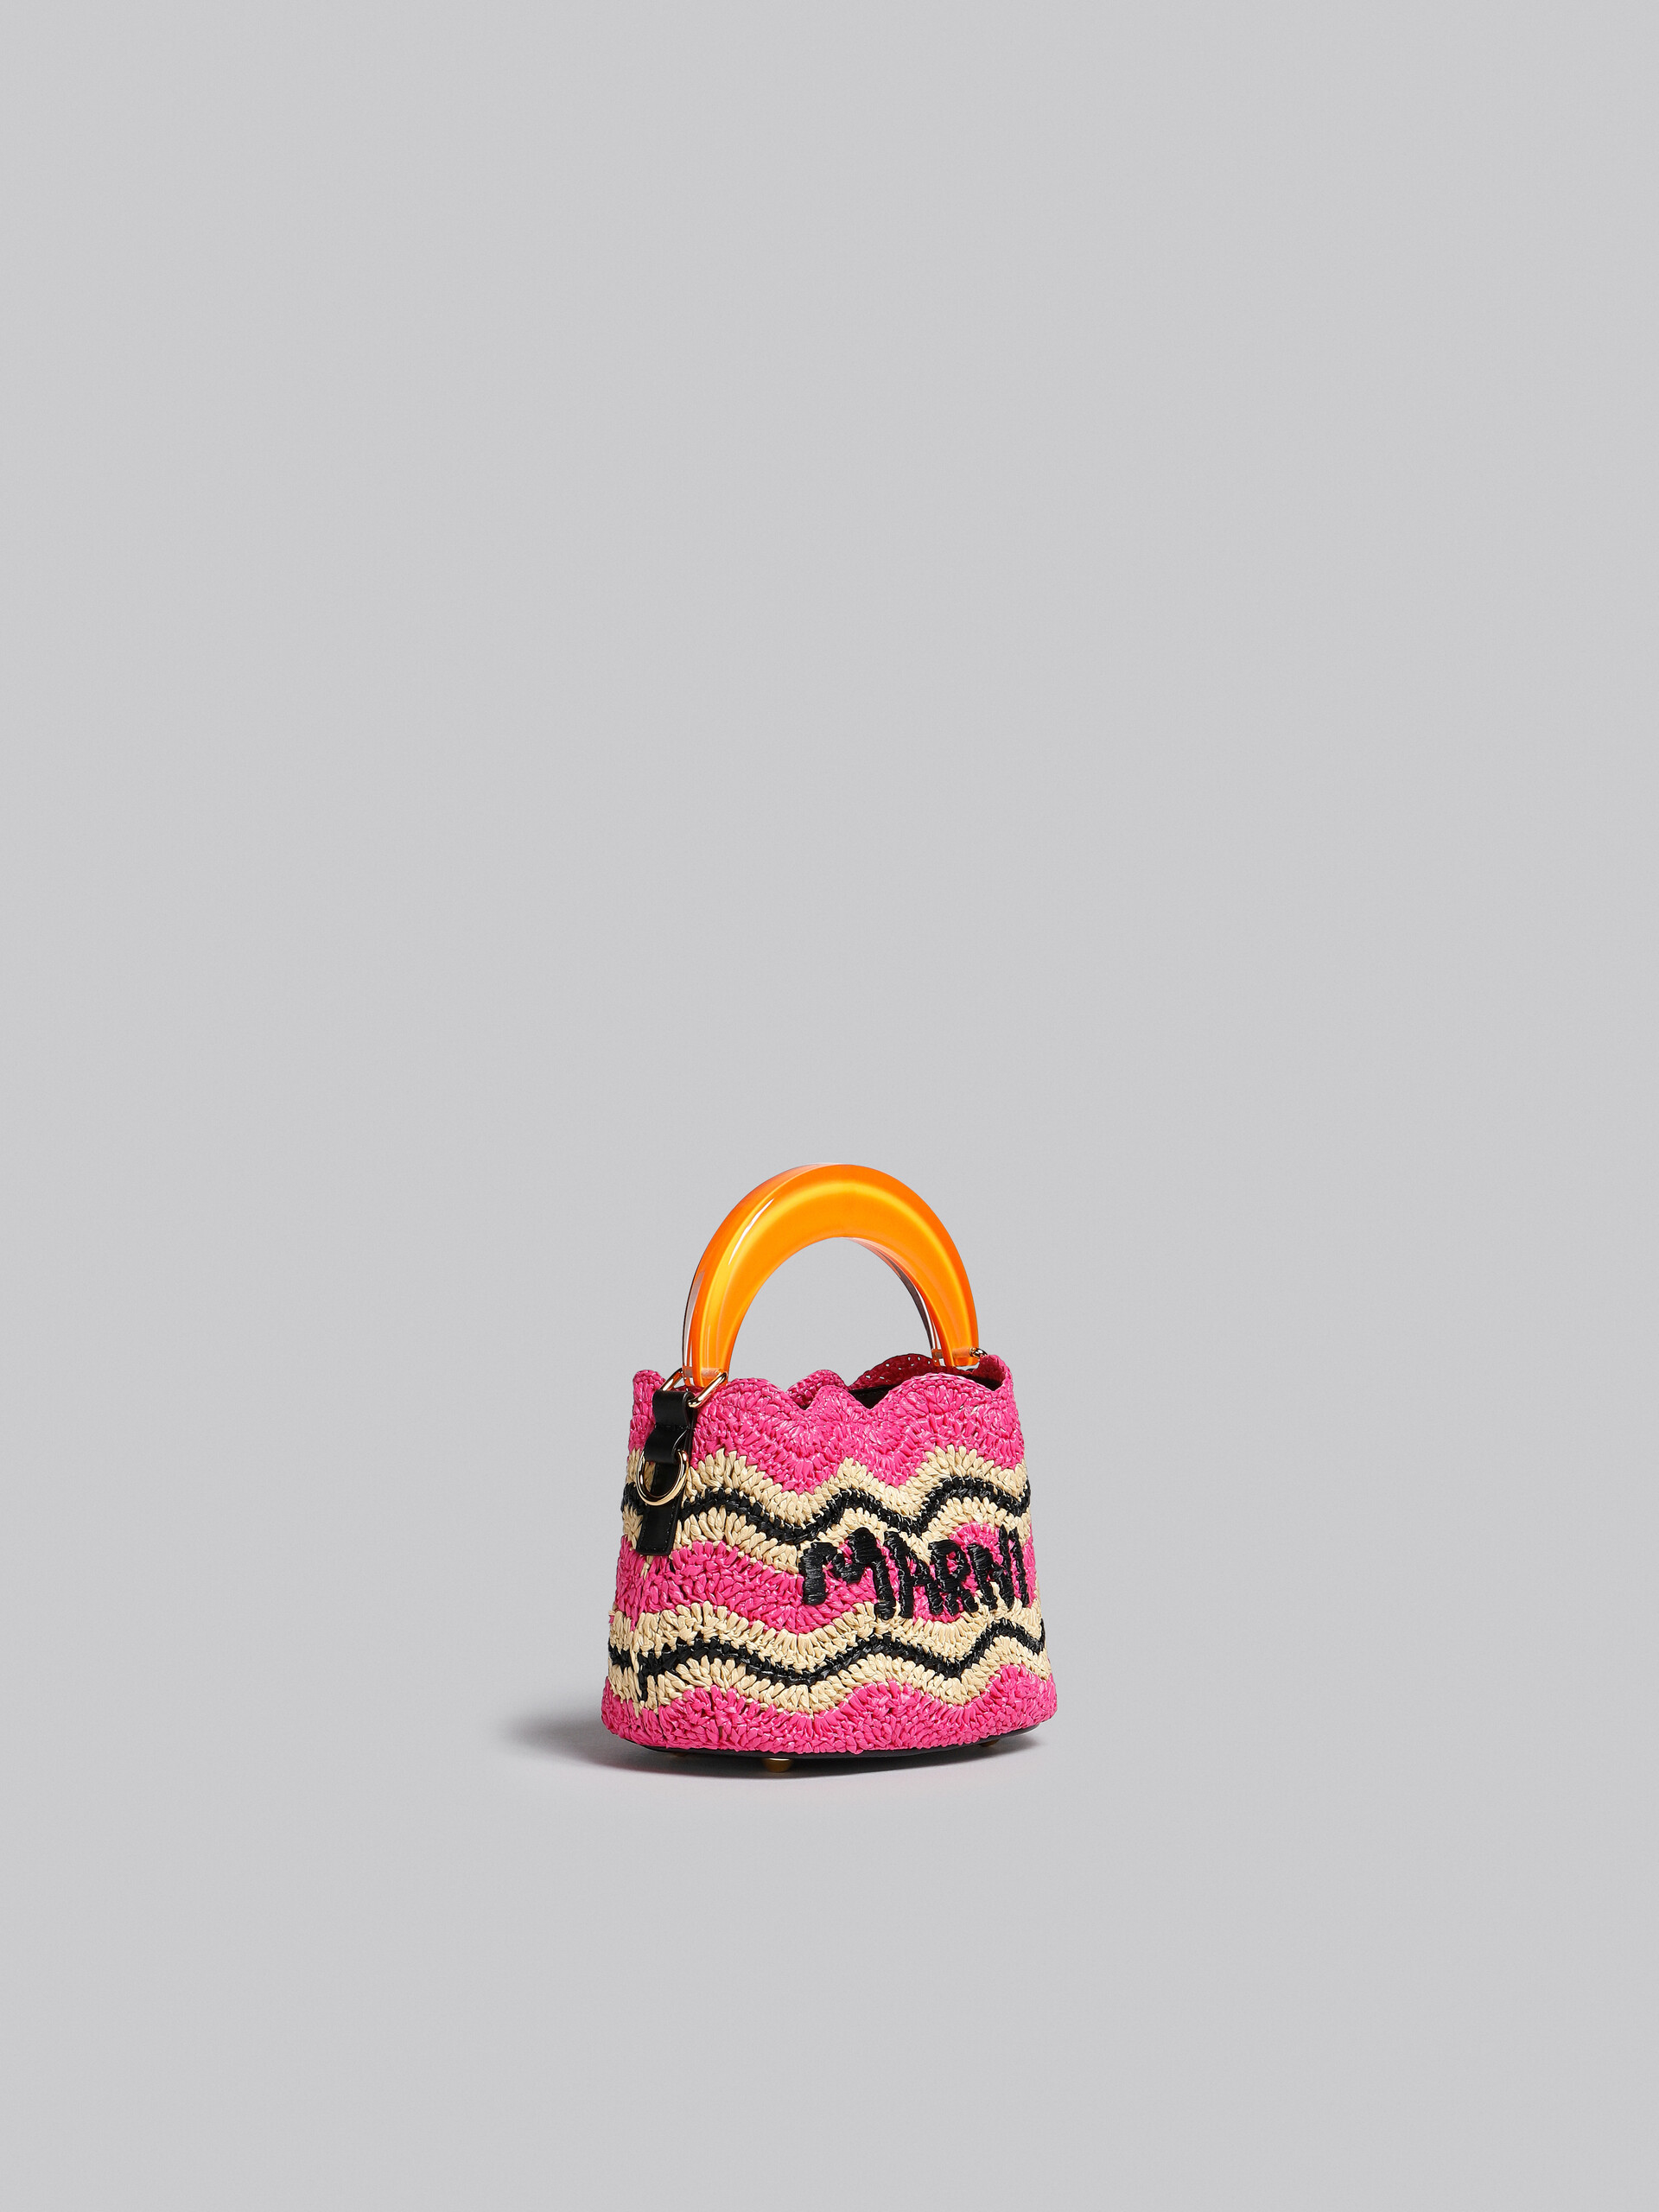 Marni x No Vacancy Inn - Venice Mini Bucket in fuchsia crochet raffia - Shoulder Bag - Image 6